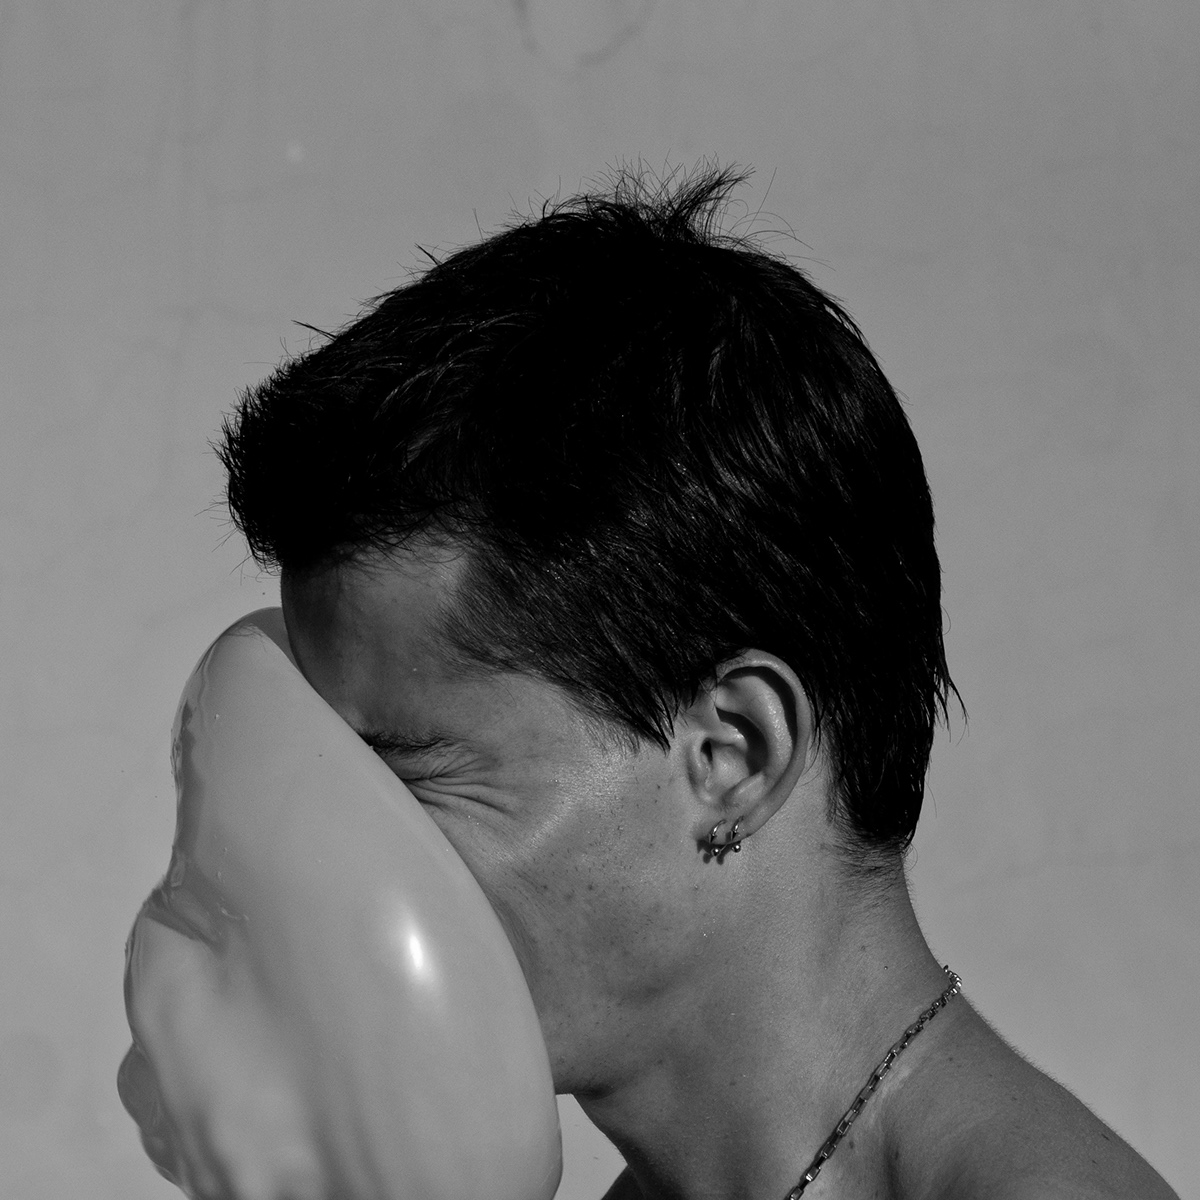 Brazil bauru colozio Nikon D90 ballon portrait water Fun speed